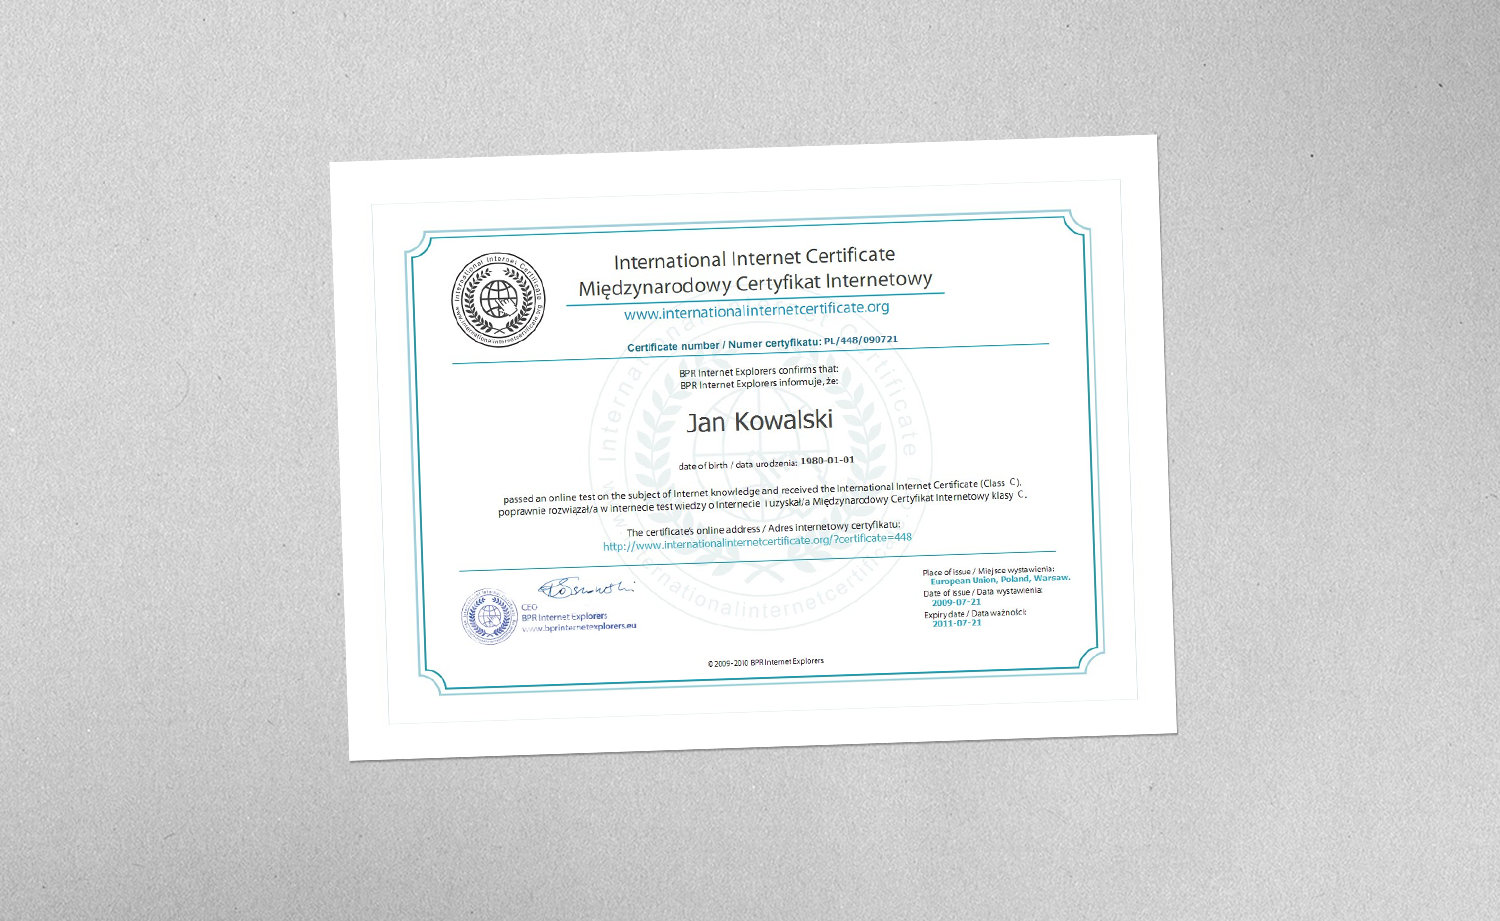 International Internet Certificate – BPR’s project